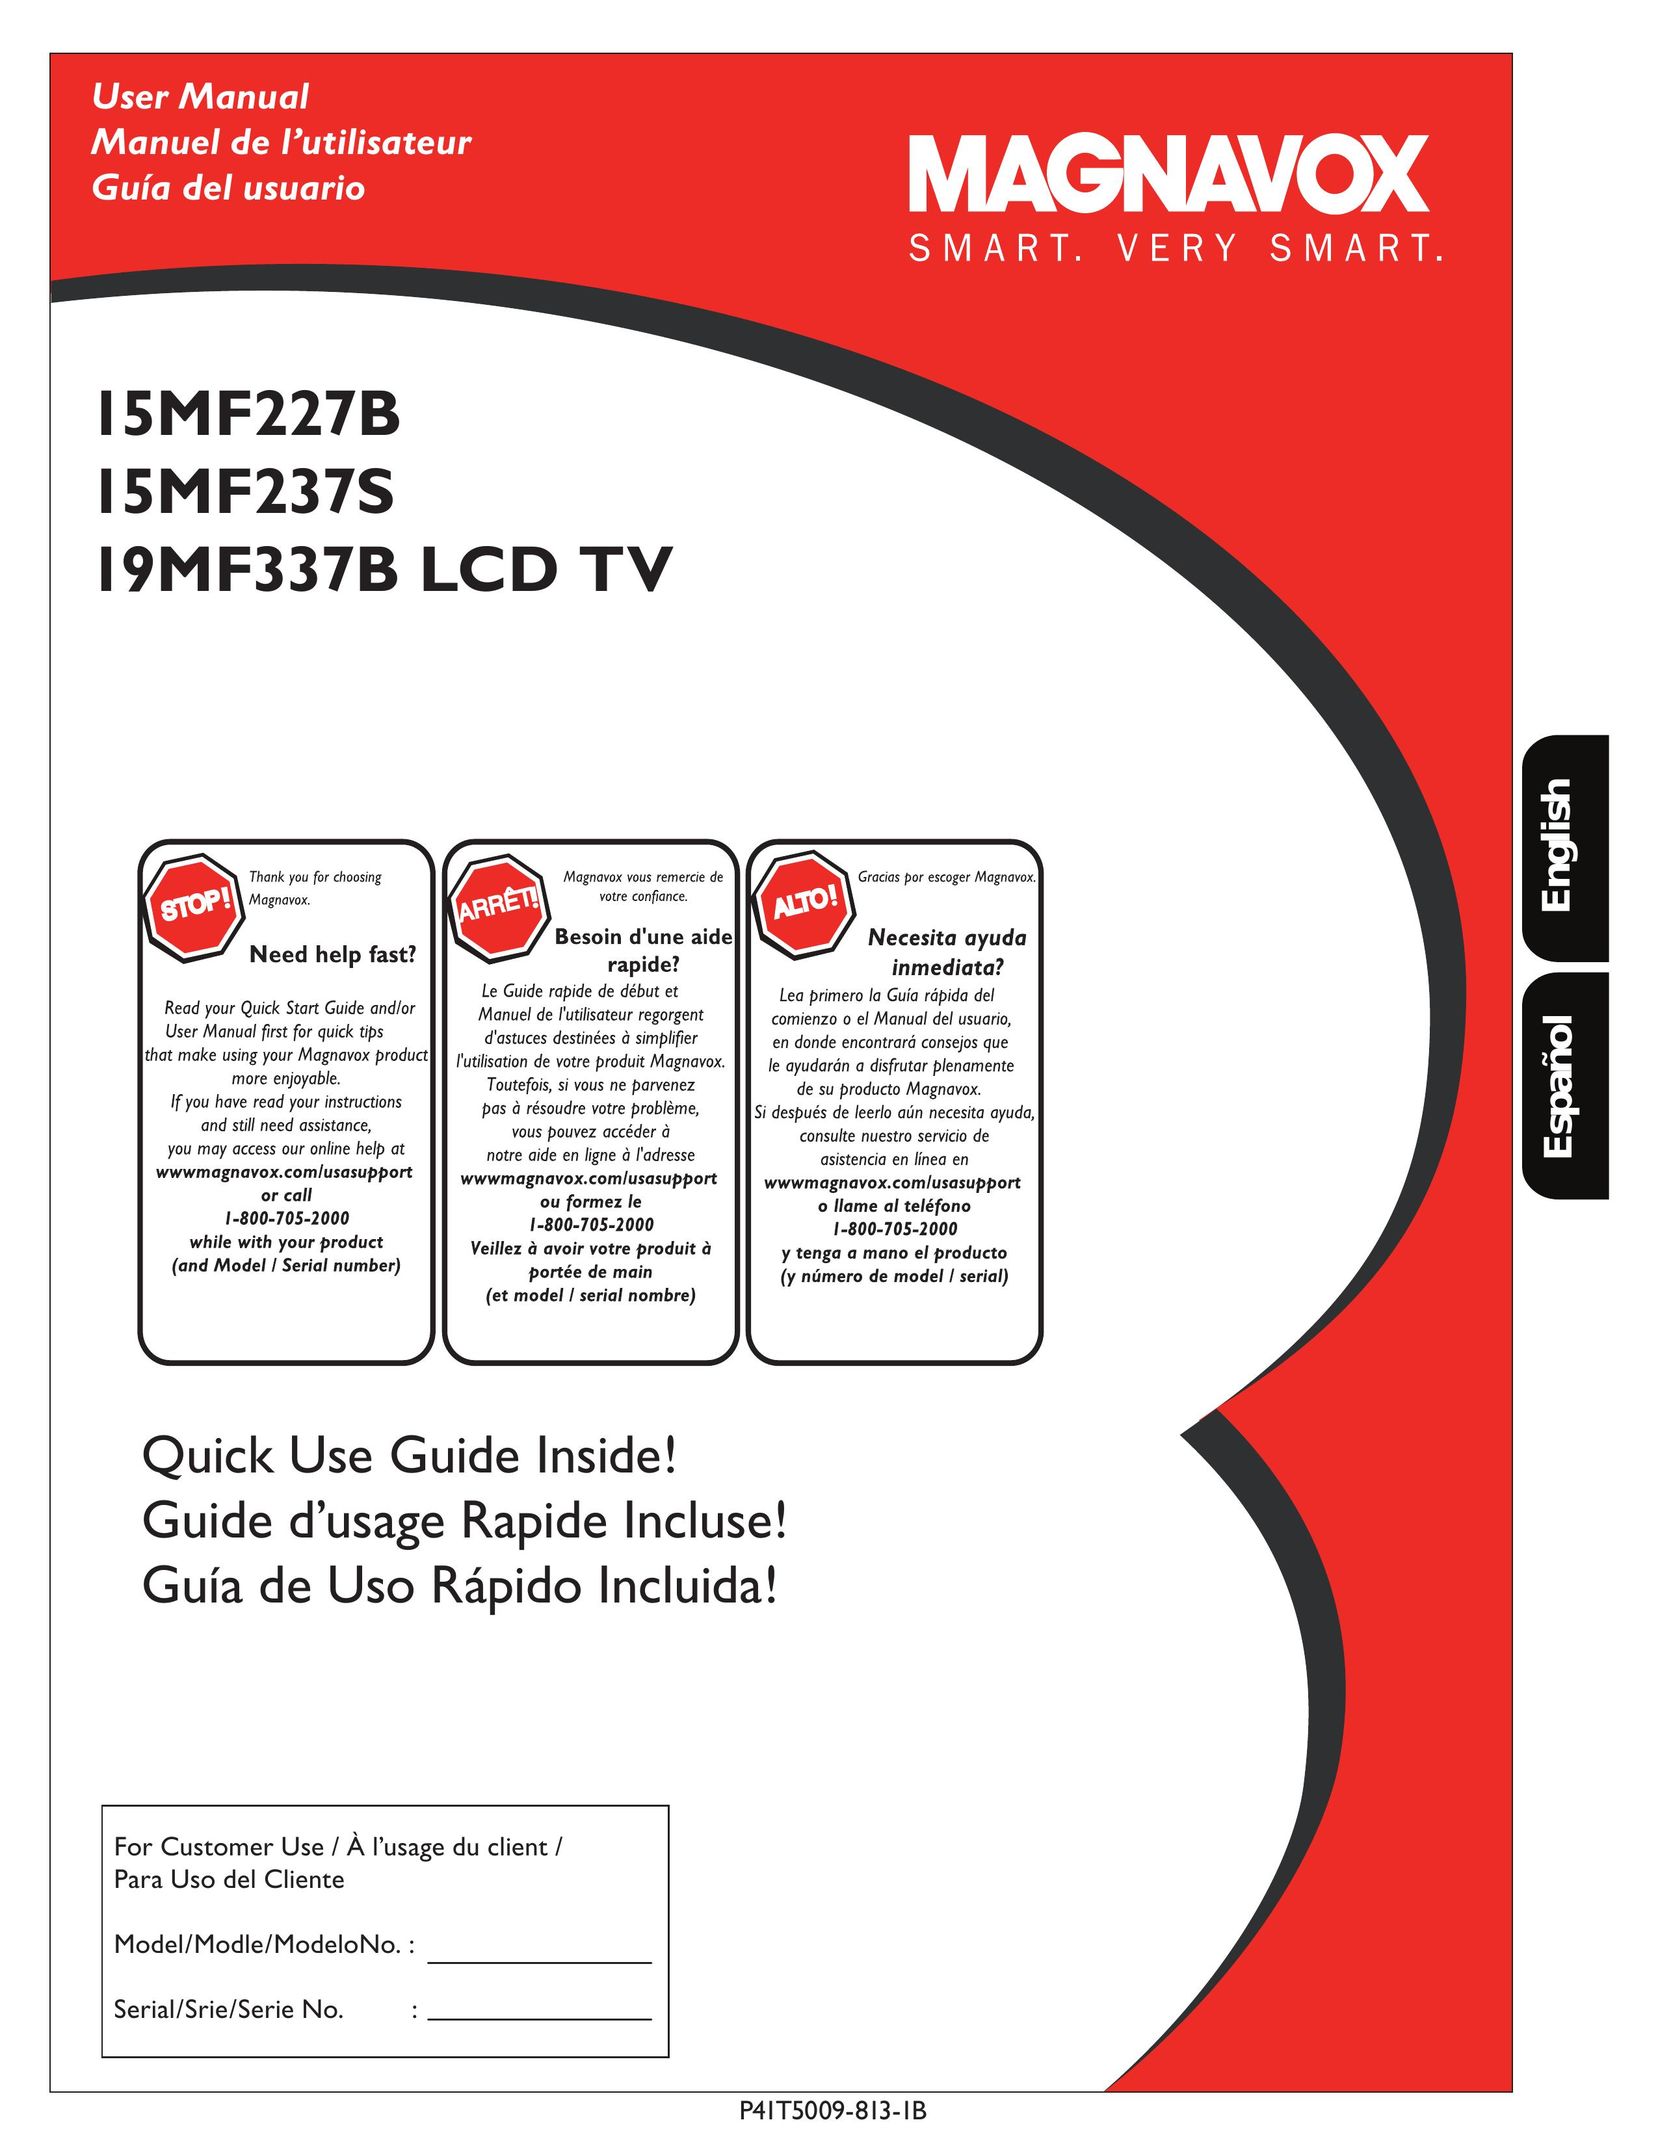 Magnavox 15MF227B Flat Panel Television User Manual